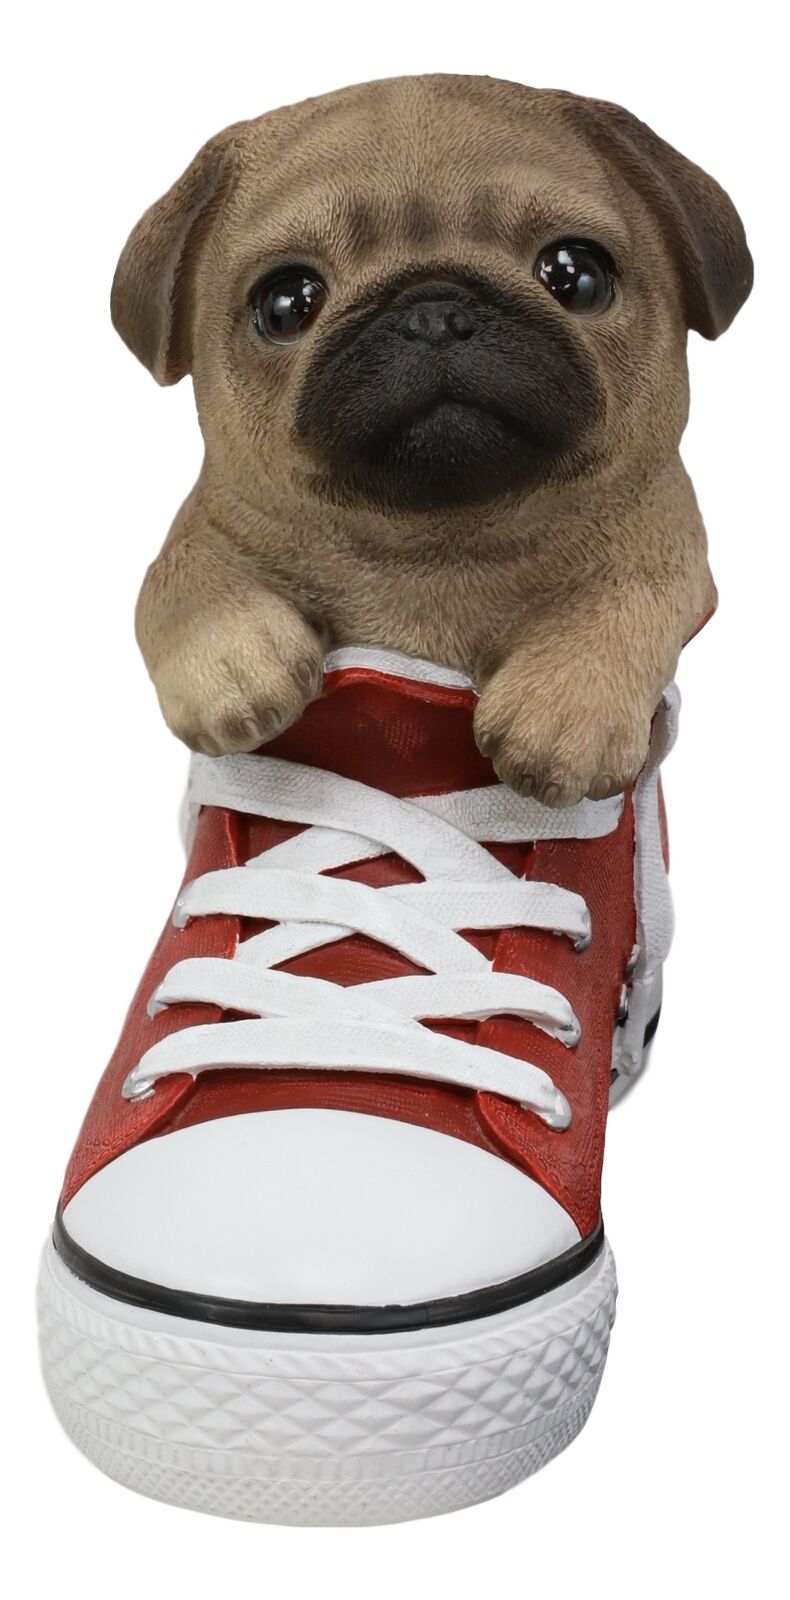 Paw-Star Pups Lifelike Pugsie Fawn Pug Puppy Dog in Sneaker Chucks Shoe Statue